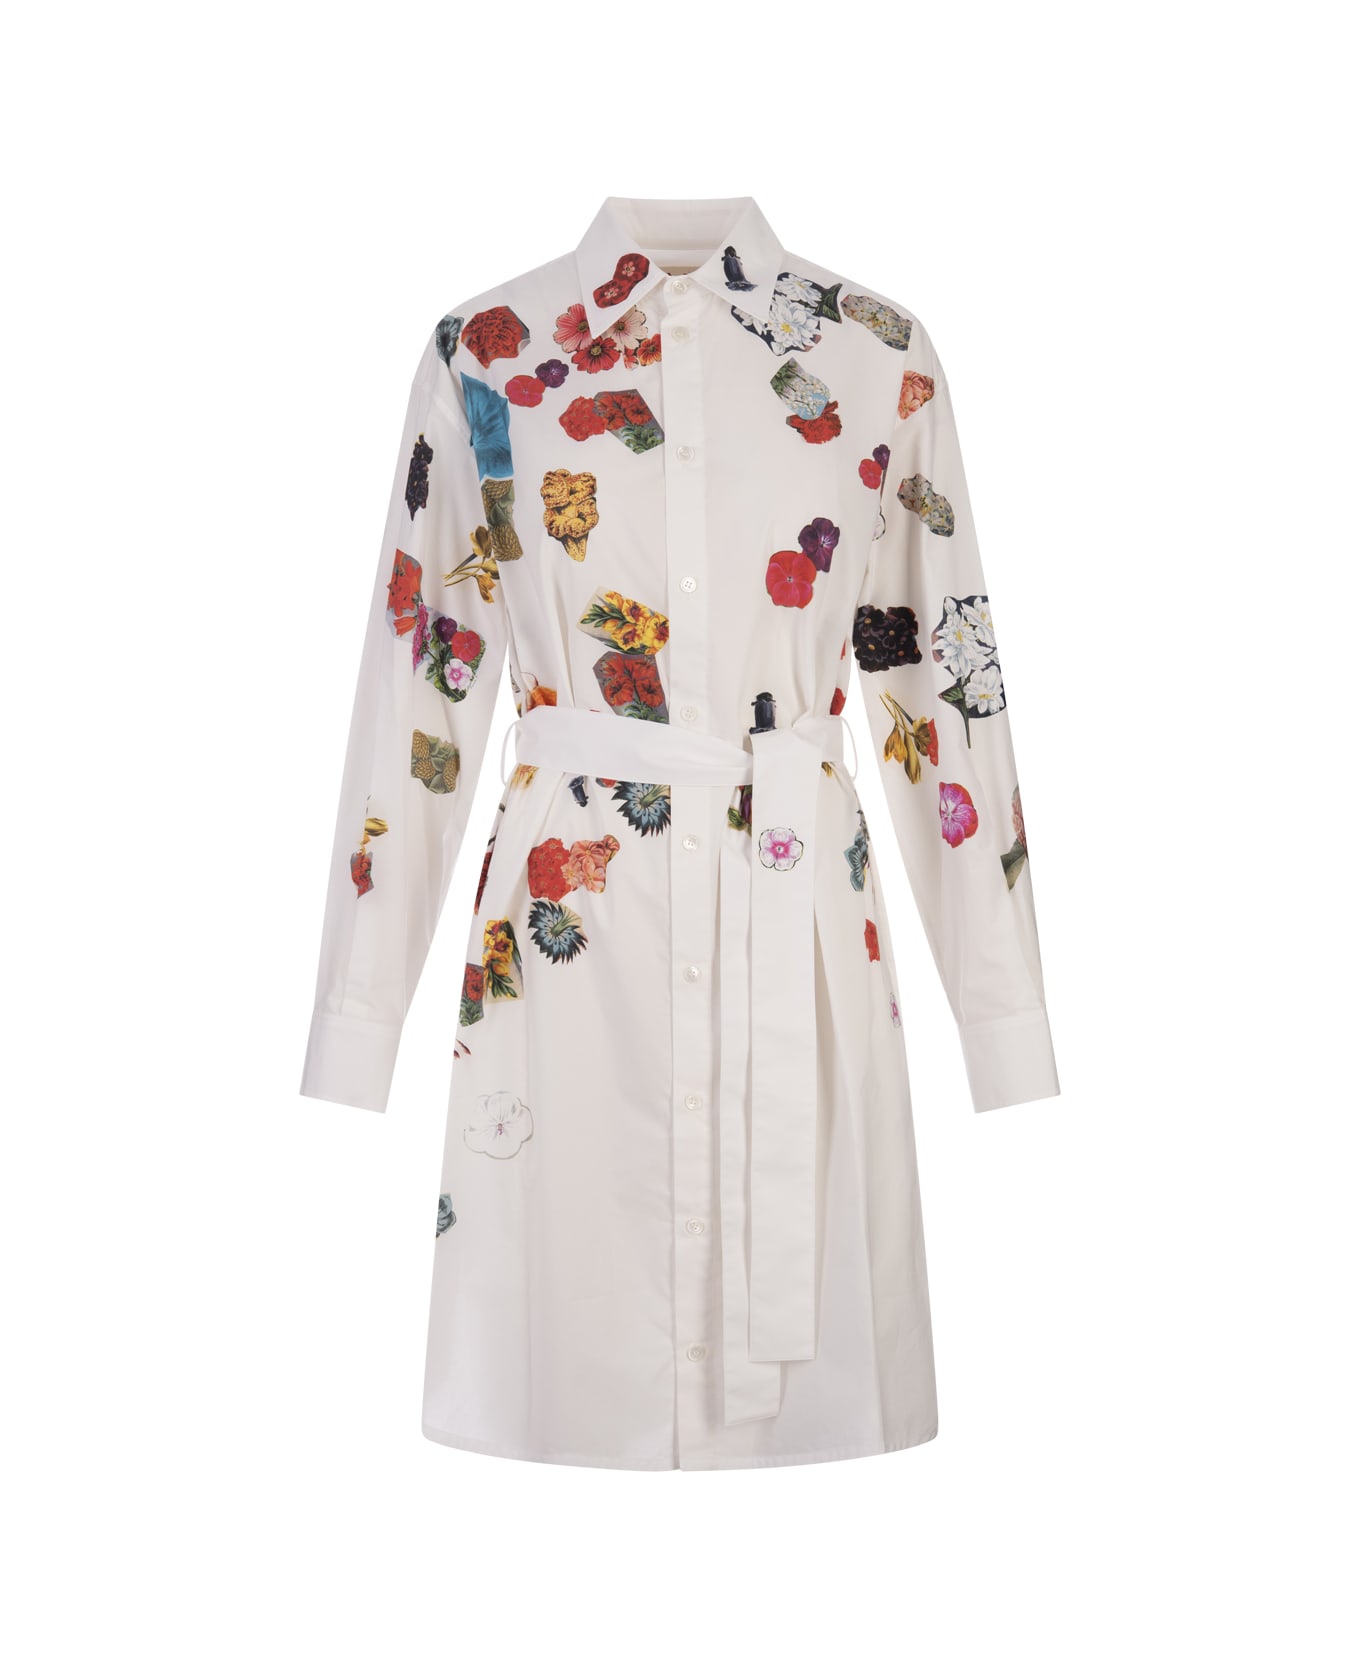 Marni White Short Shirt Dress With Floral Print - White